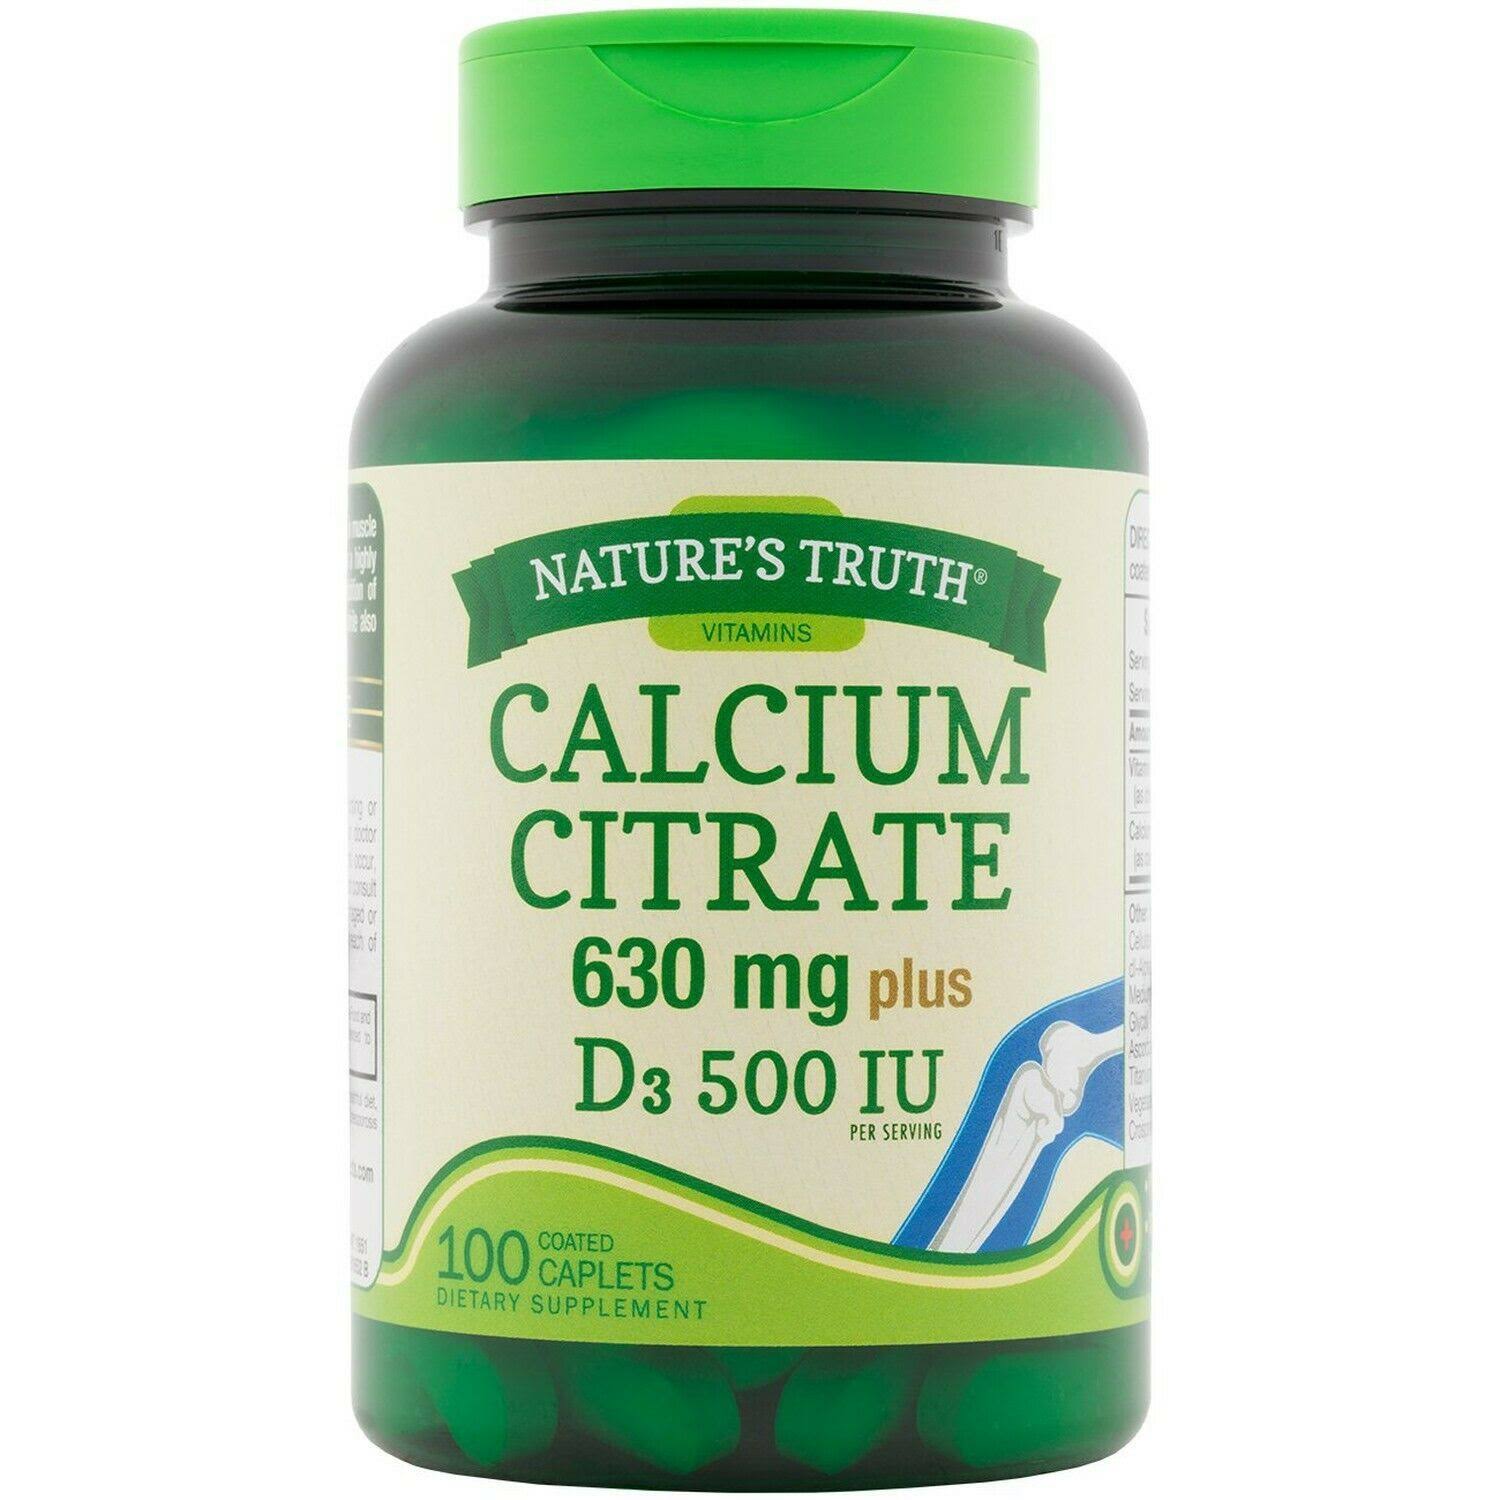 Nature's Truth Max Calcium Citrate Supplement - 630mg, D3 500IU, 100ct